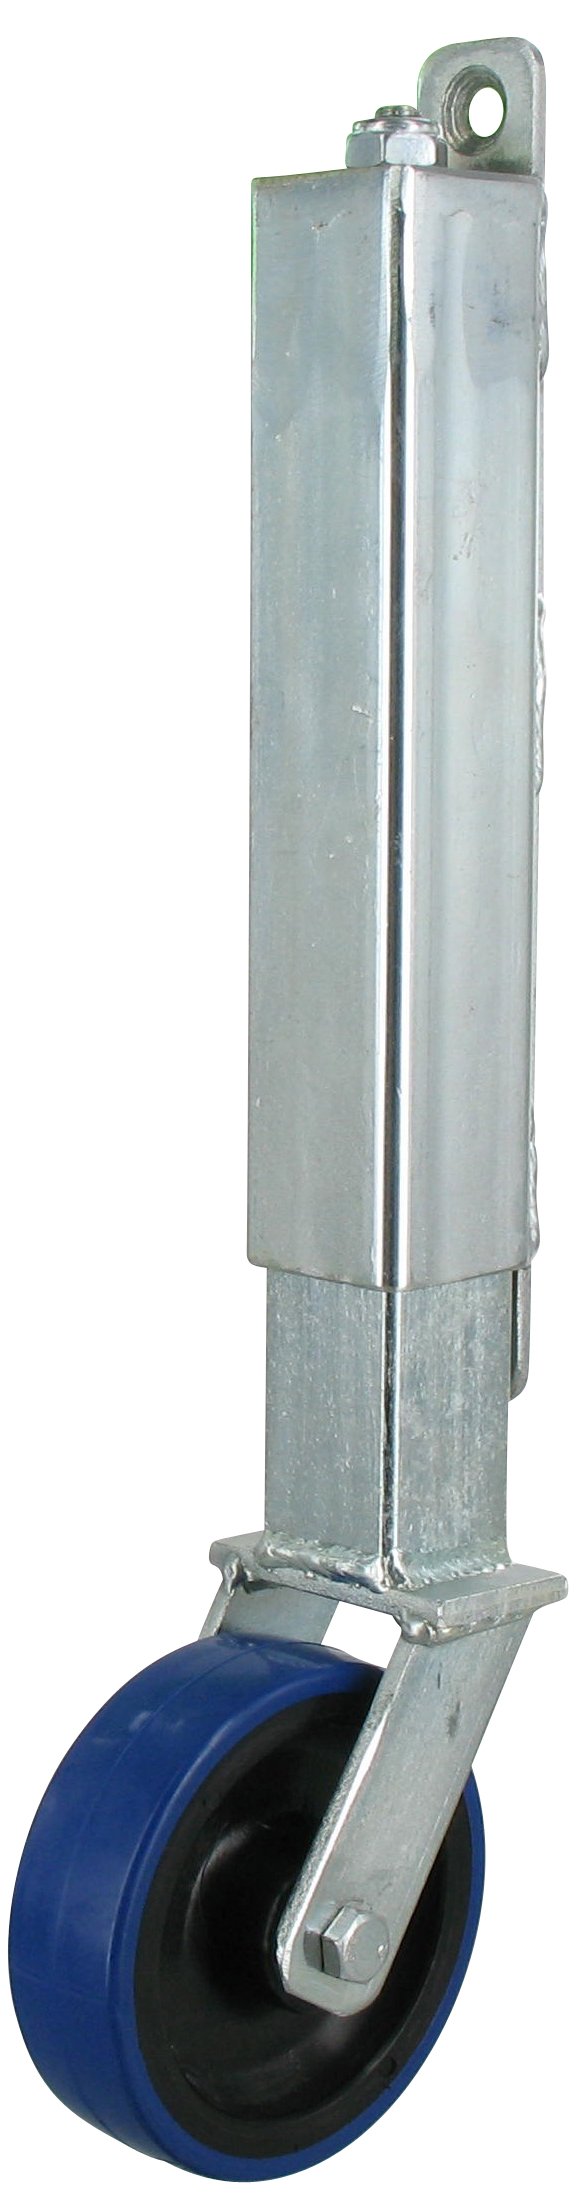 Torrolle PKB NBF Serie, Ø100x30mm, Stahl, geschweißt, blau, 70 KG Tragfähigkeit, 401036